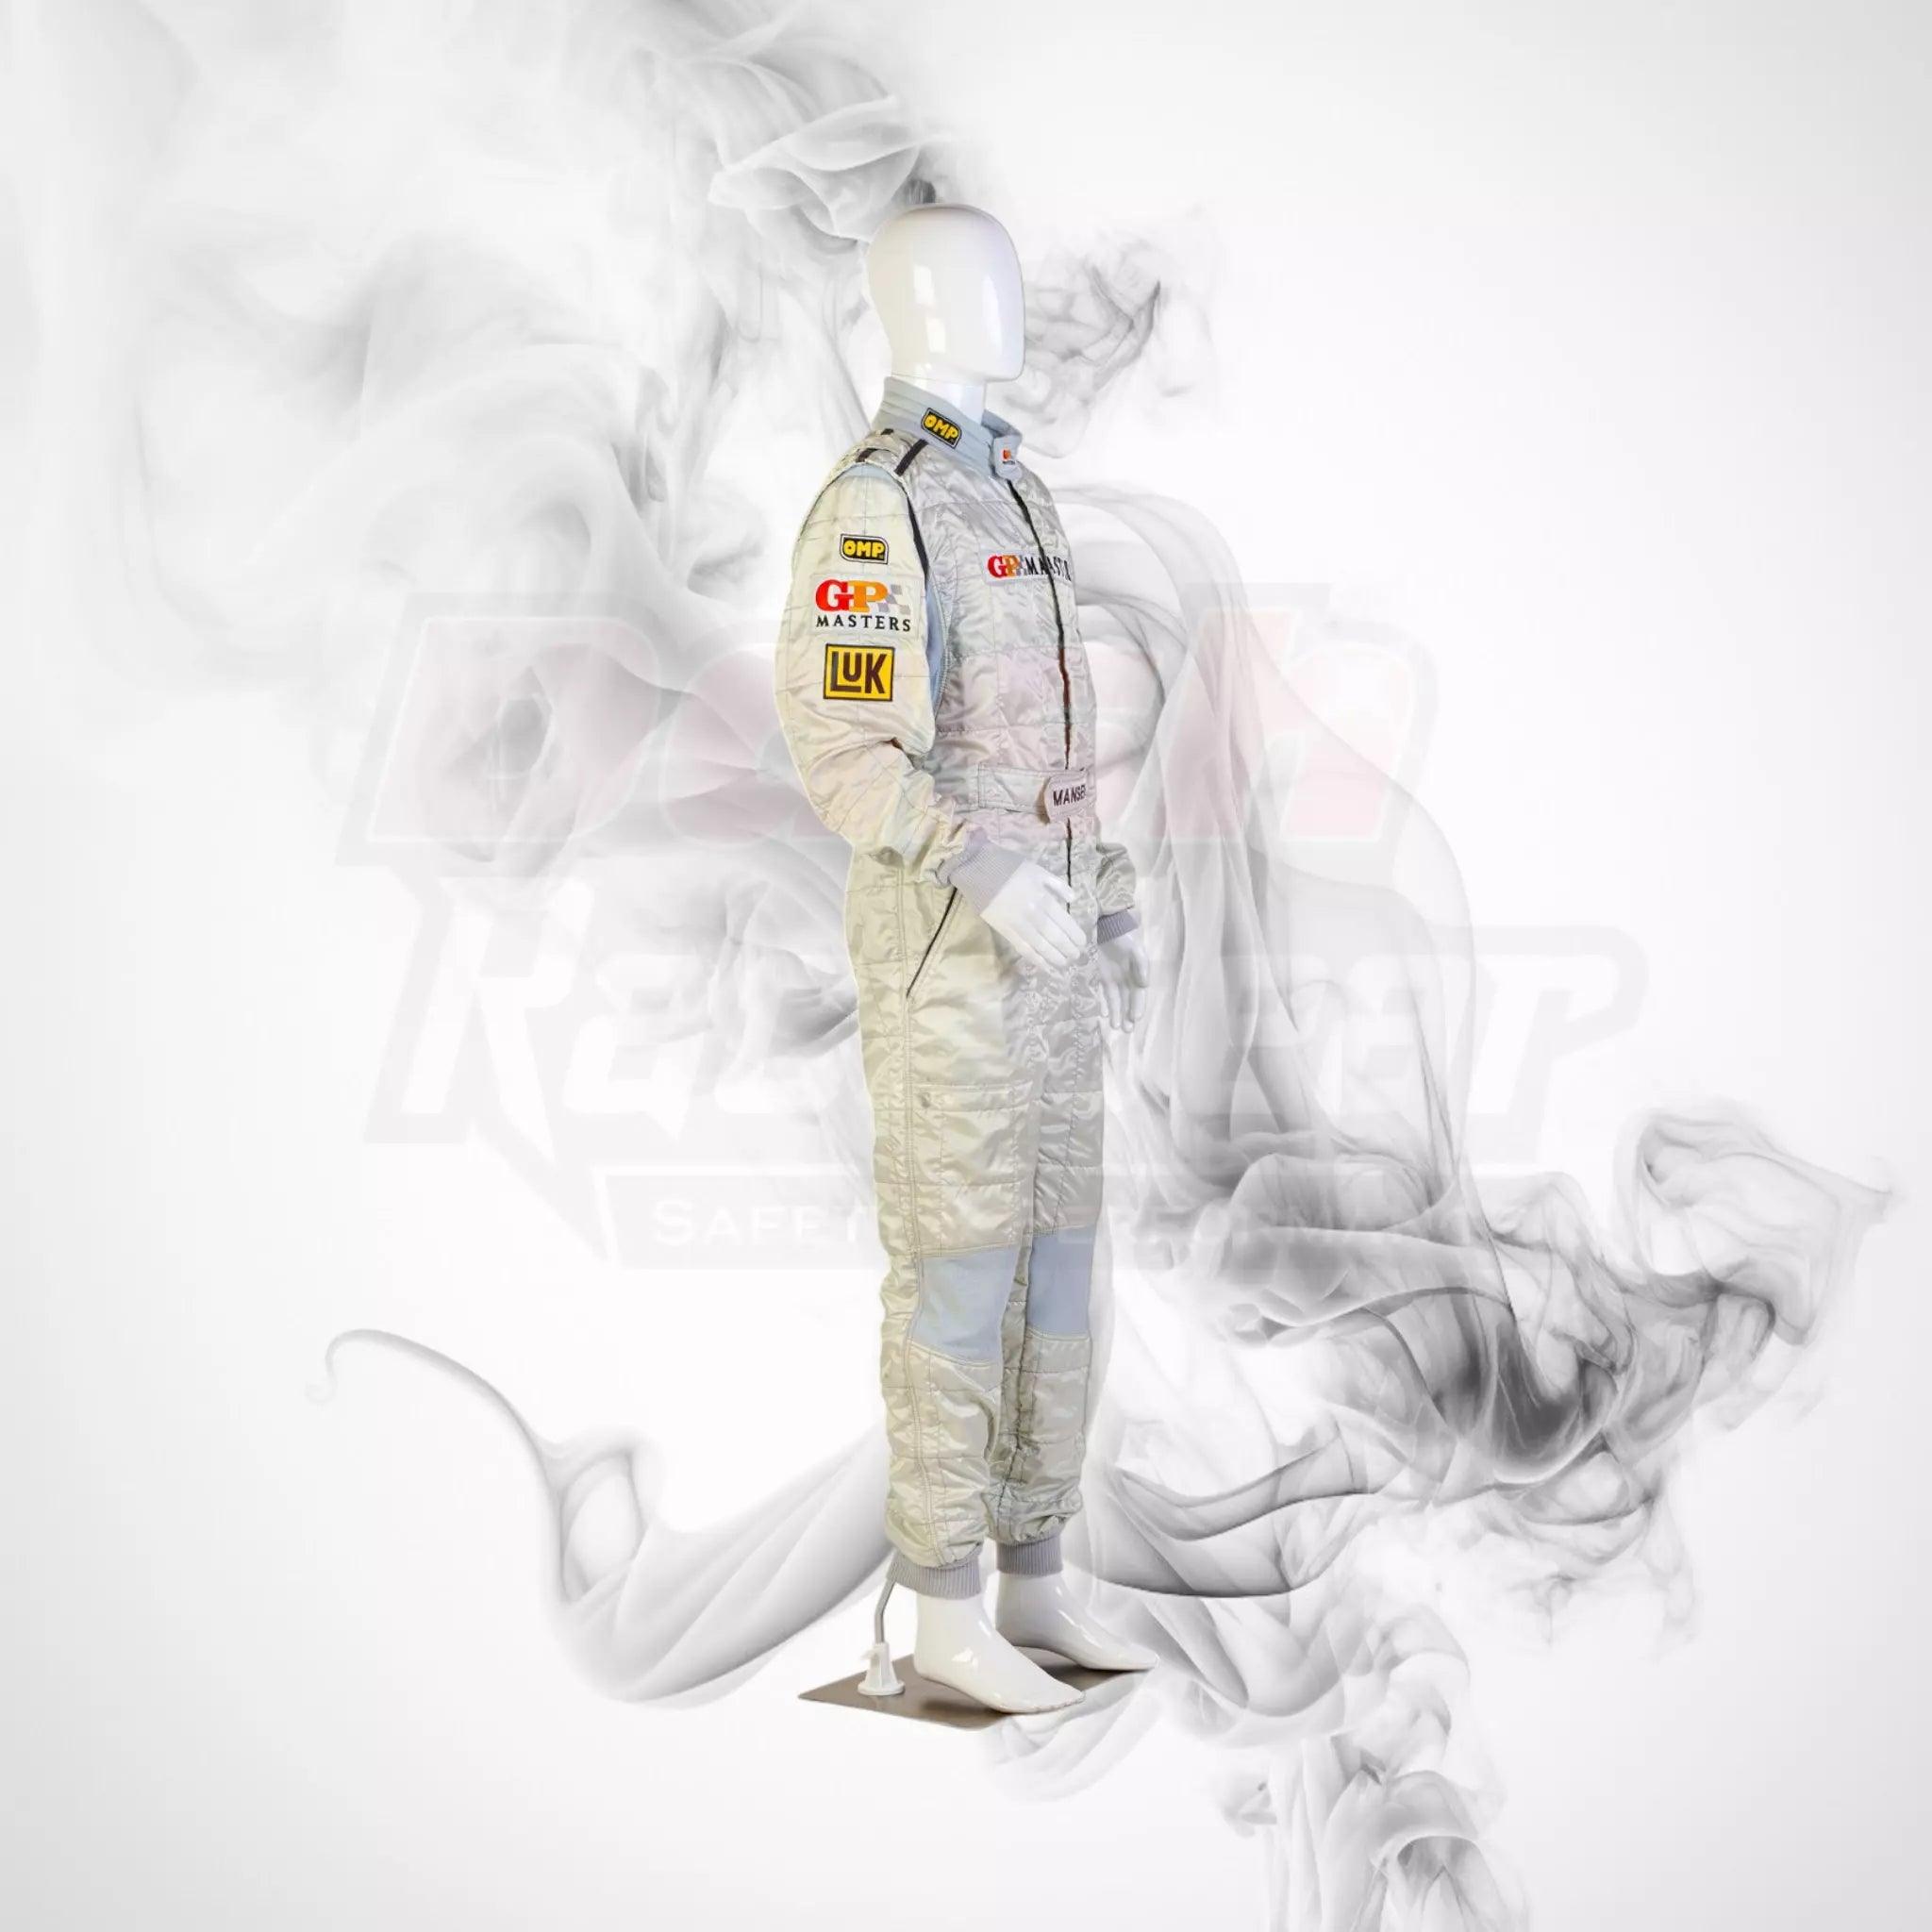 2006 OMP GP Masters NIGEL MANSELL’S Race Suit - Dash Racegear 